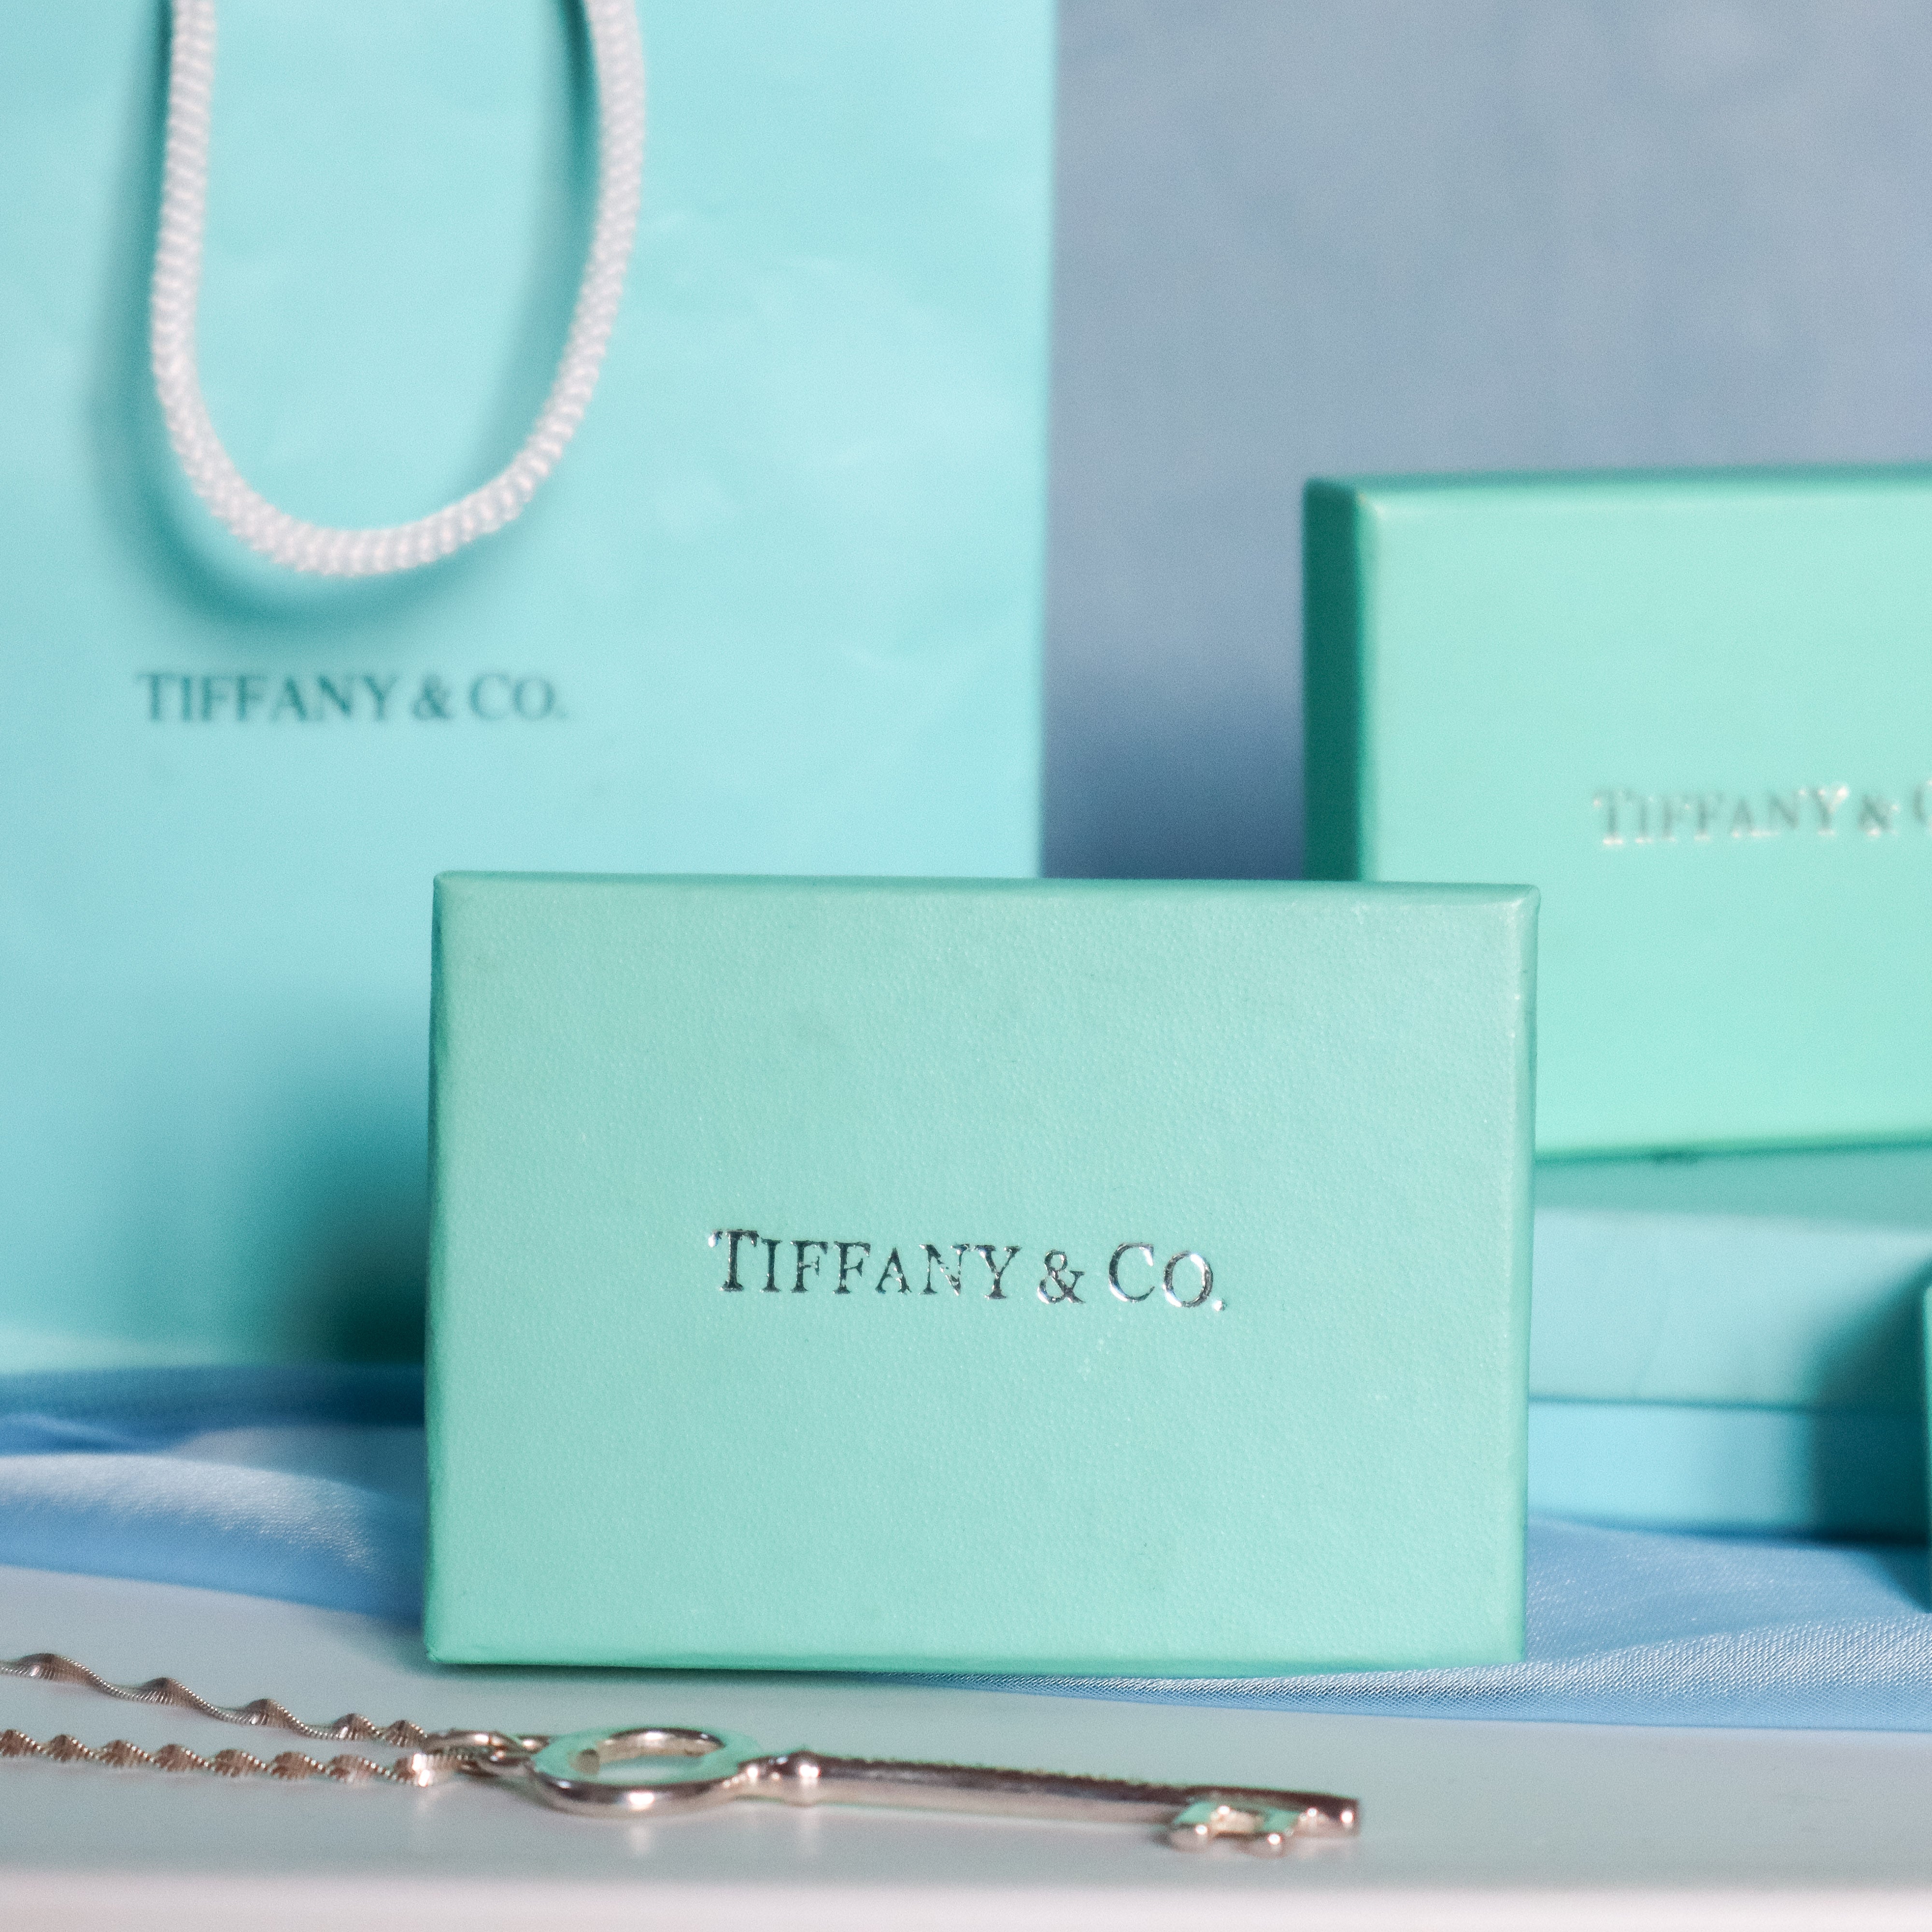 A Brief History of Tiffany & Co.